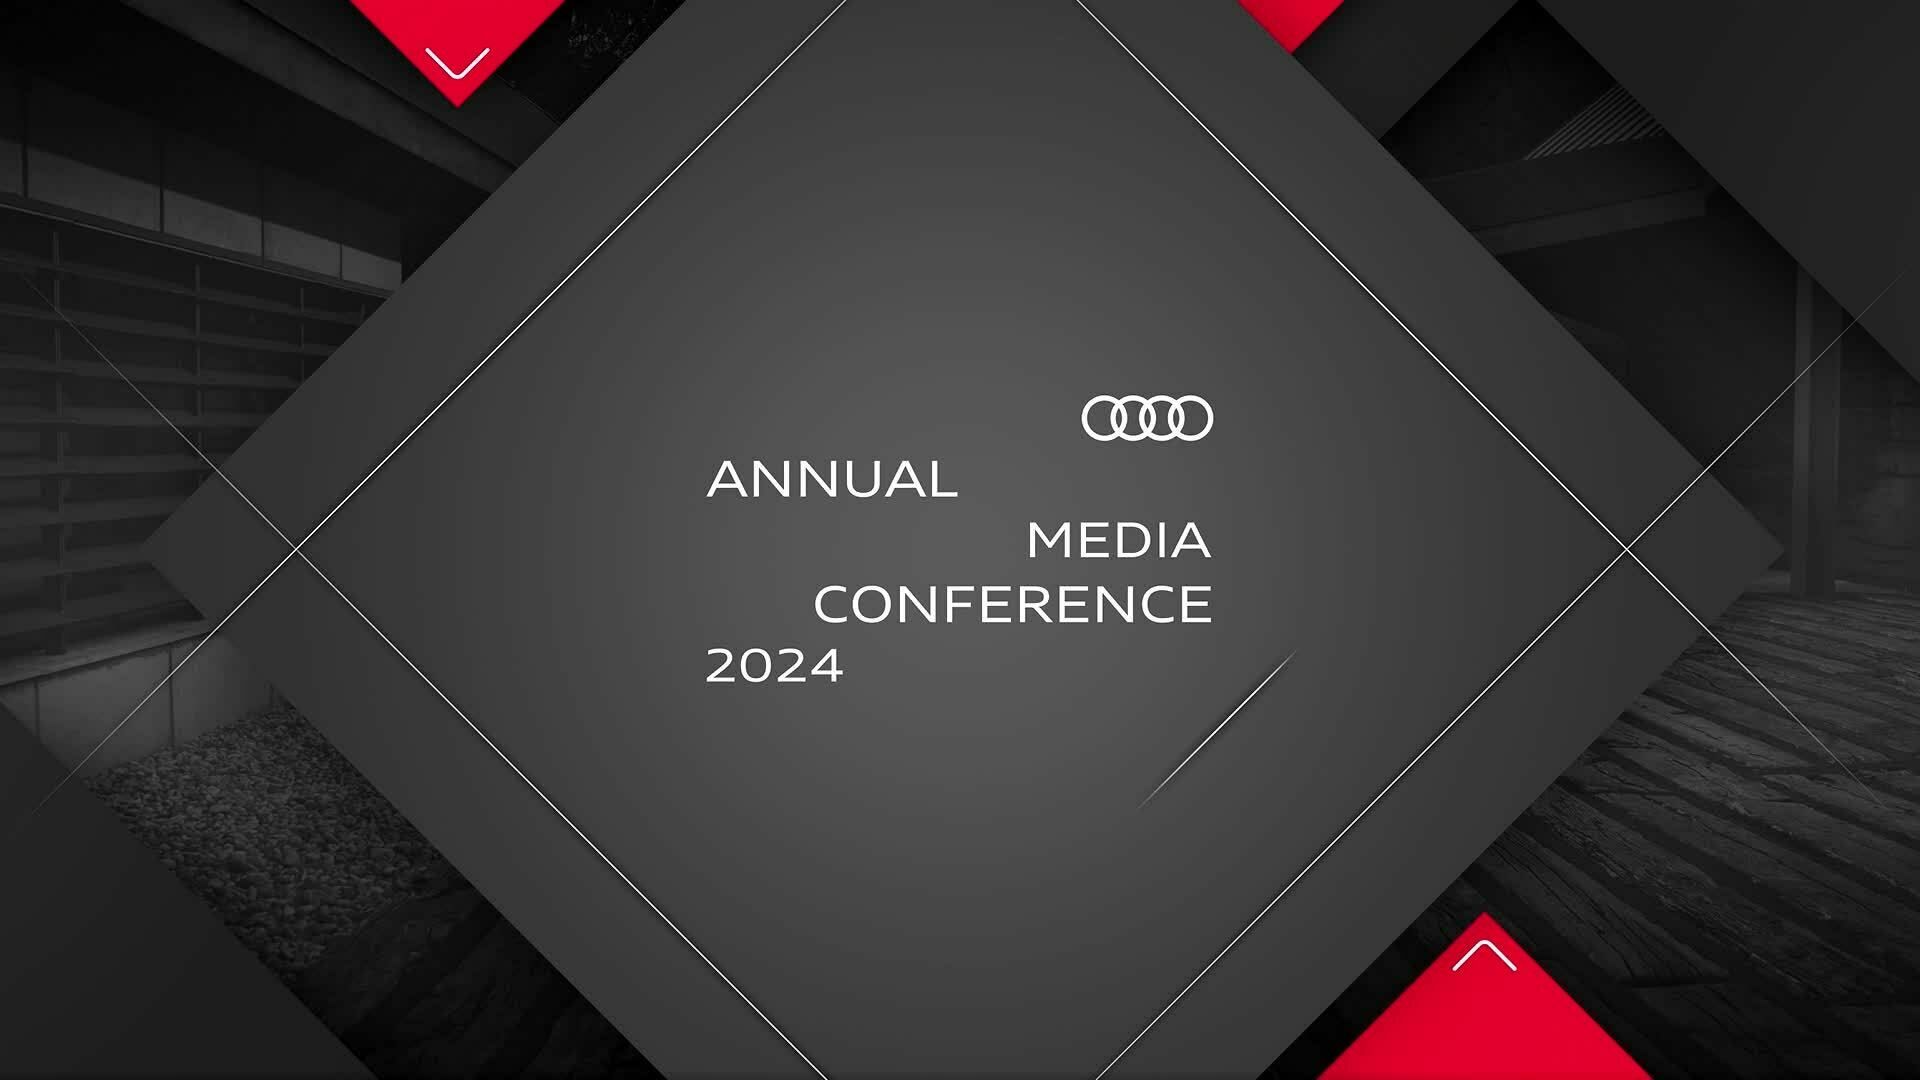 Annual Media Conference der AUDI AG 2024